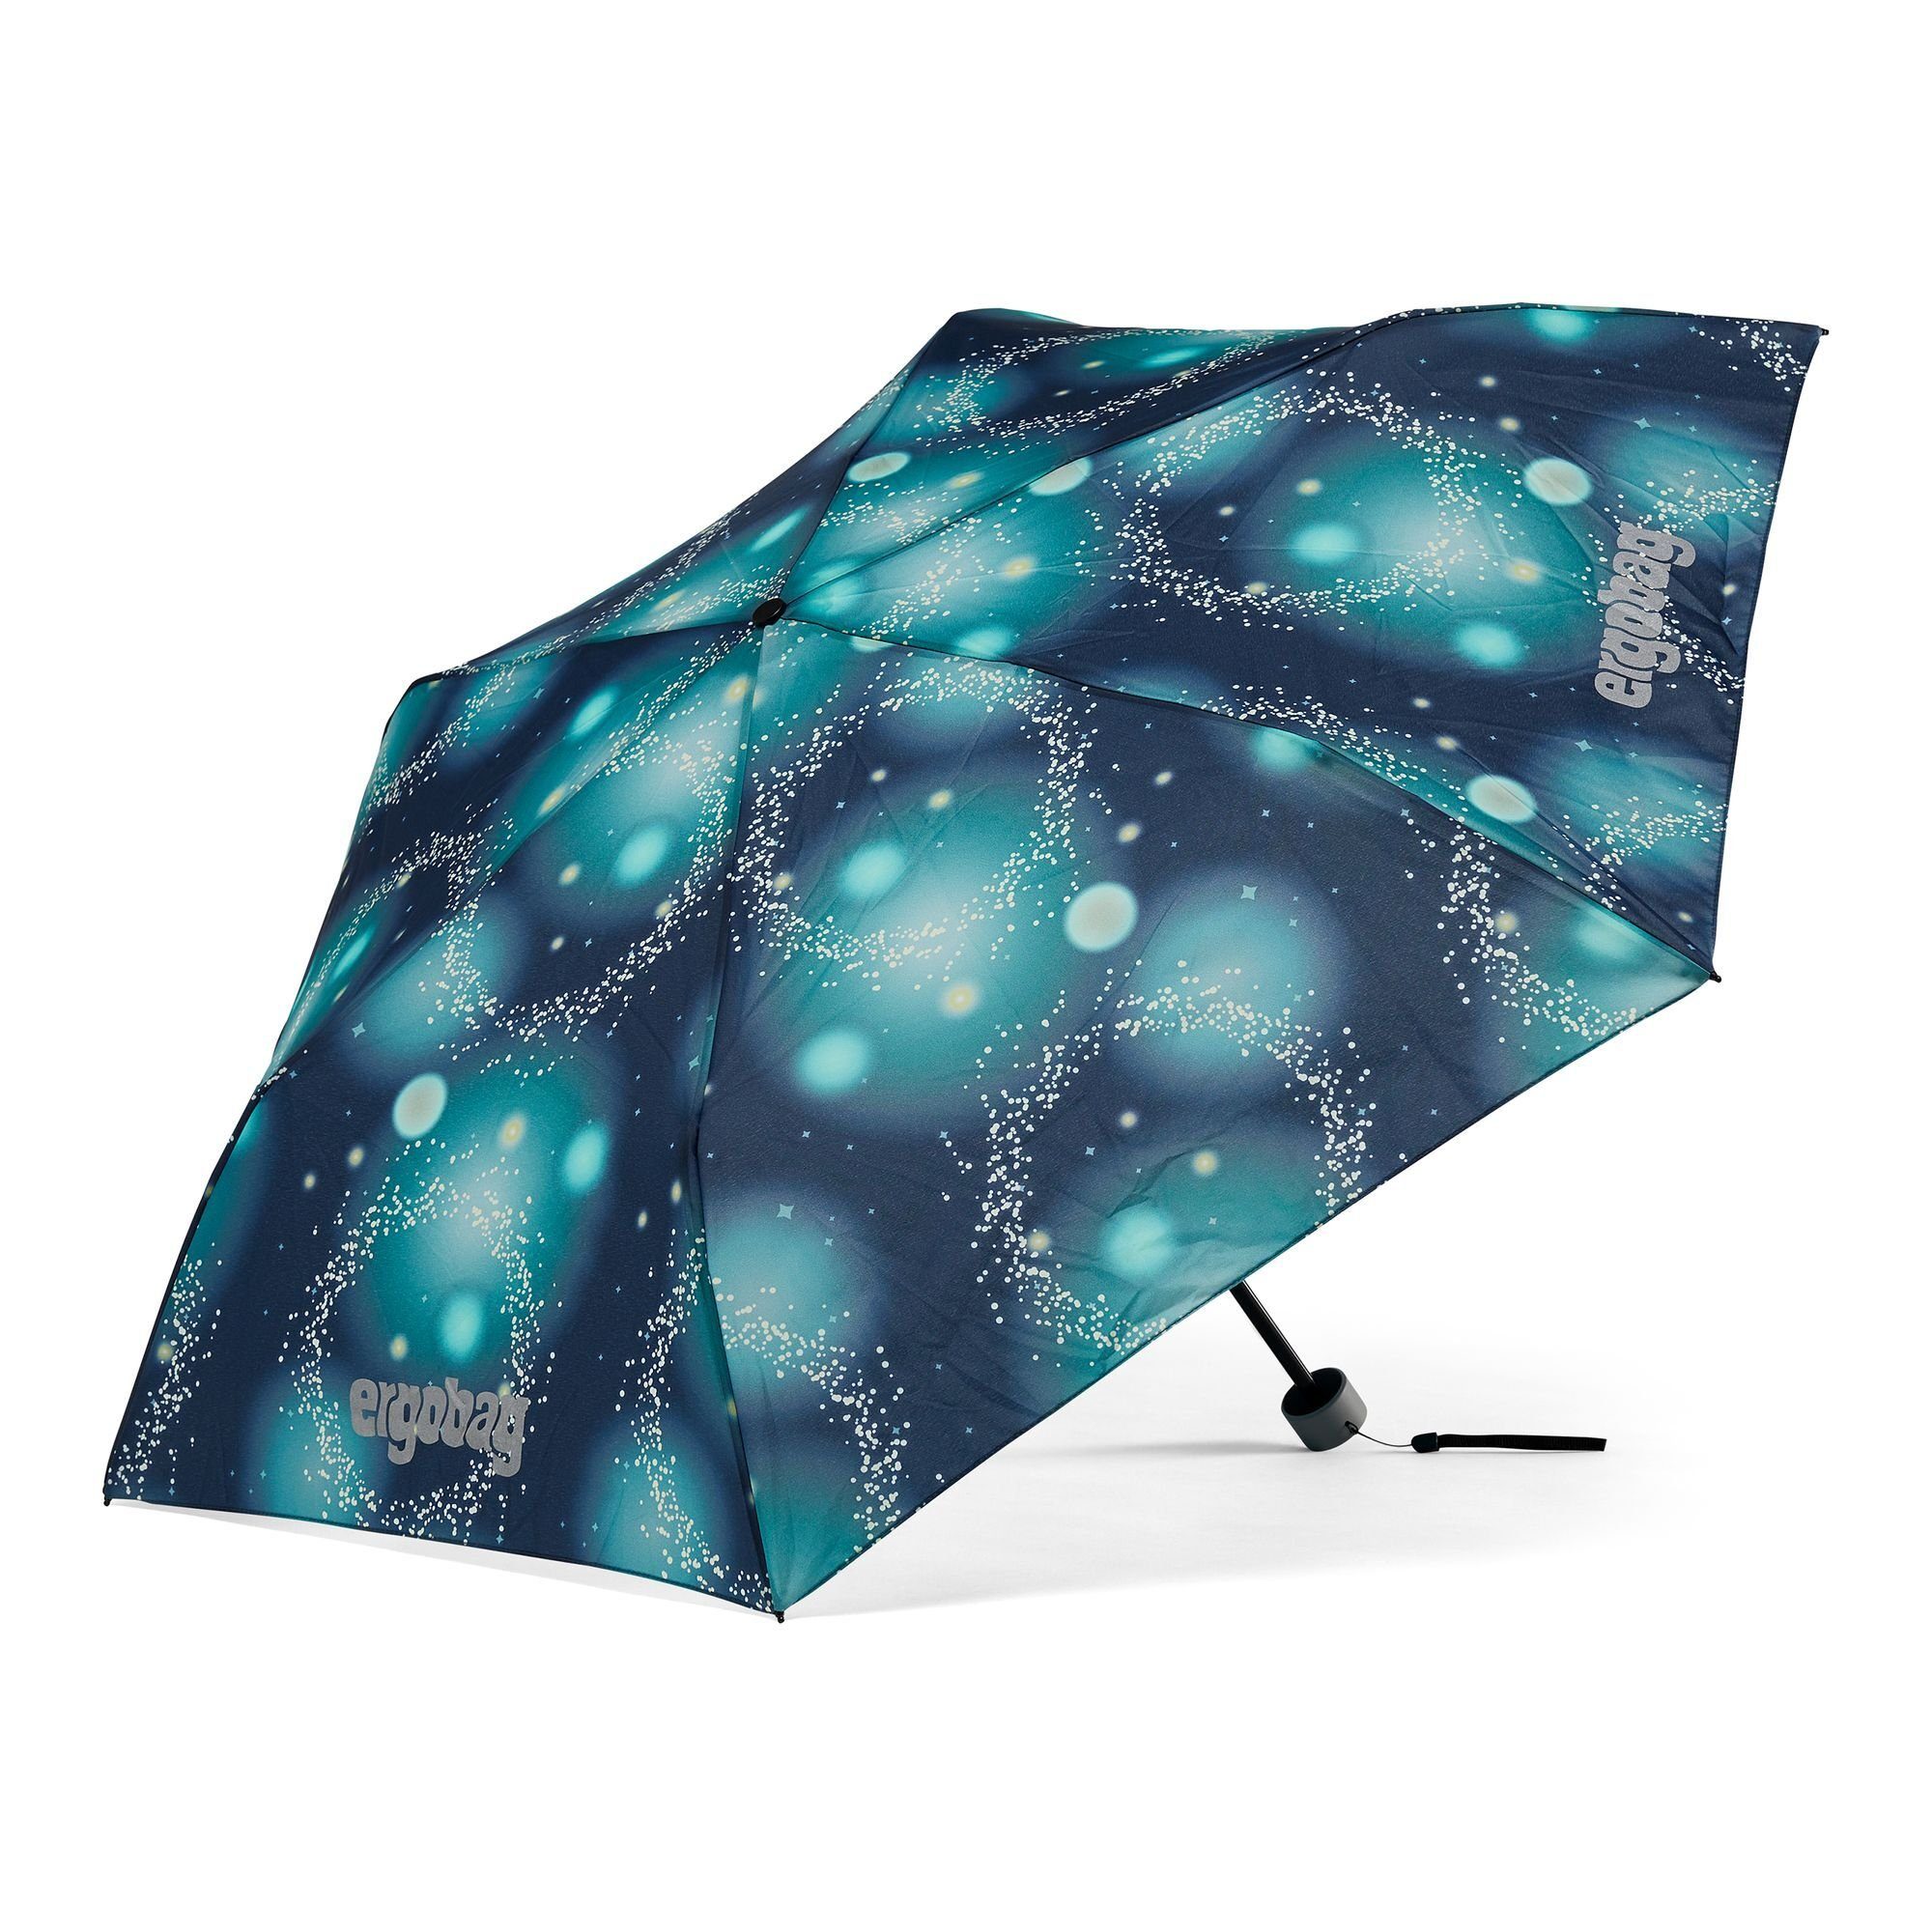 Taschenregenschirm ergobag Zubehör RaumfahrBär